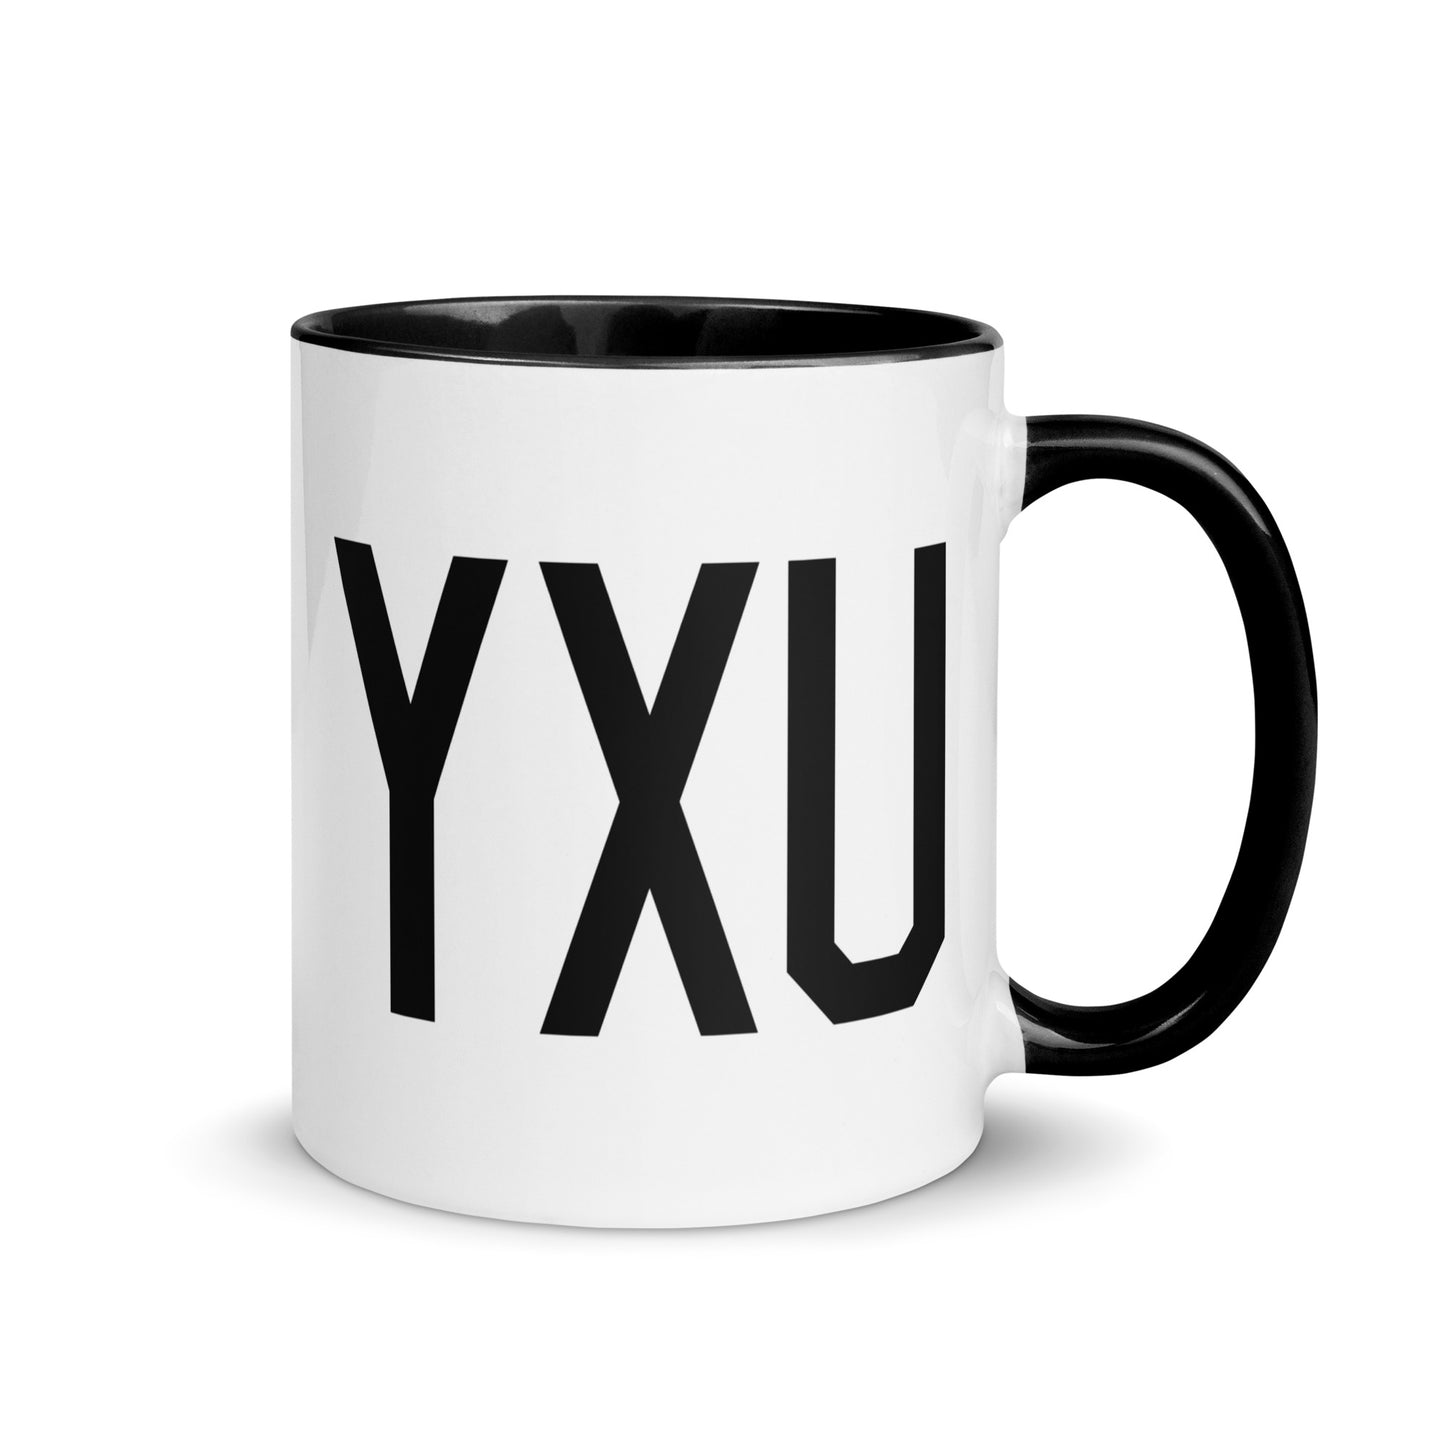 Aviation-Theme Coffee Mug - Black • YXU London • YHM Designs - Image 01